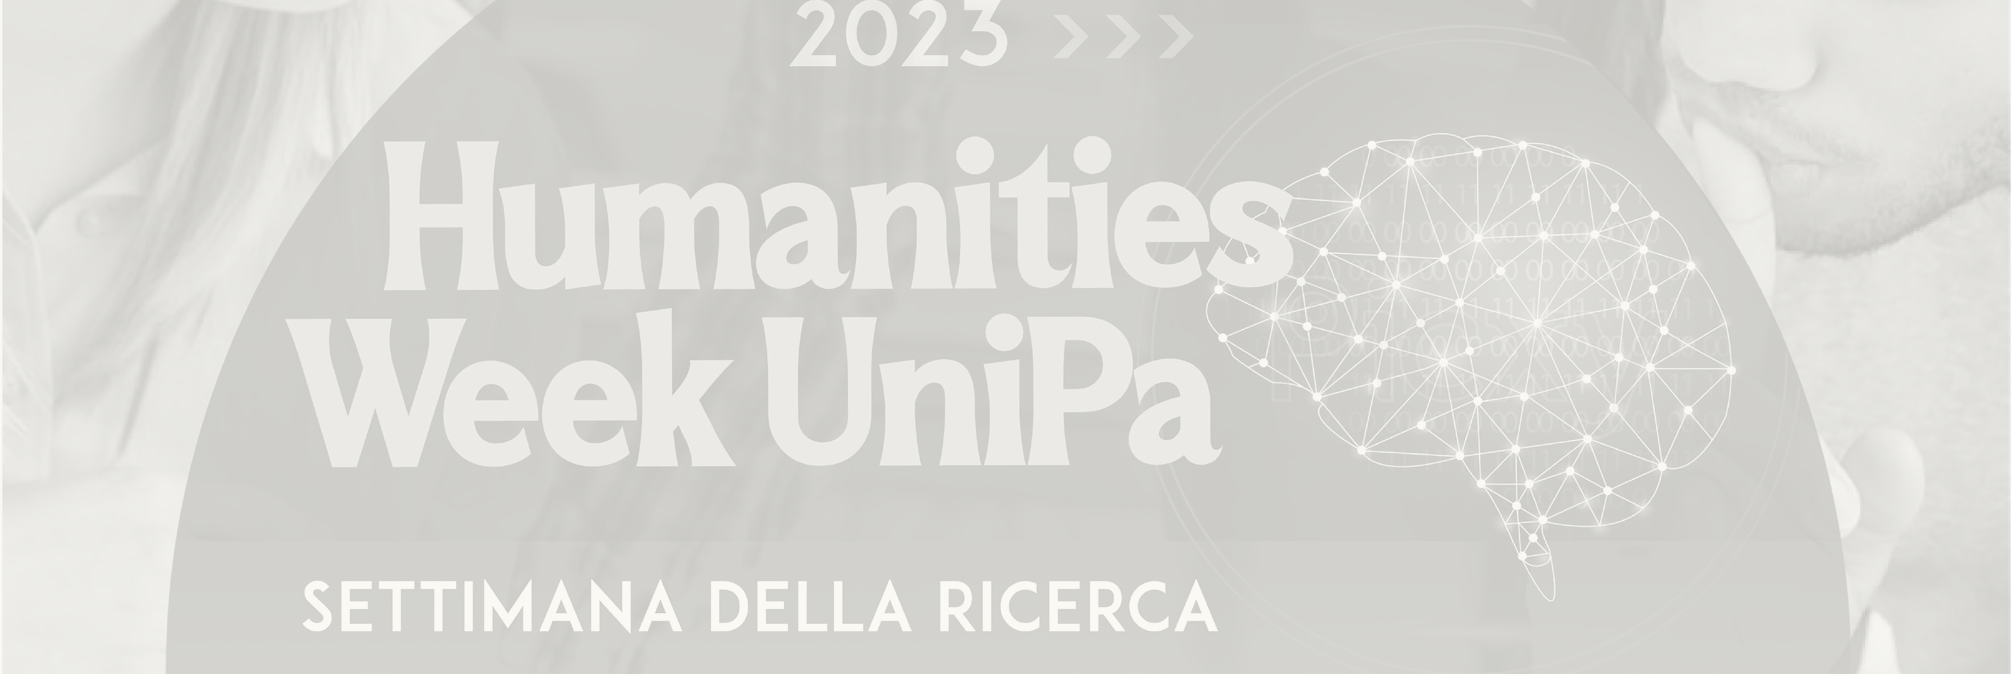 Settimana della Ricerca: Humanities Week UniPa